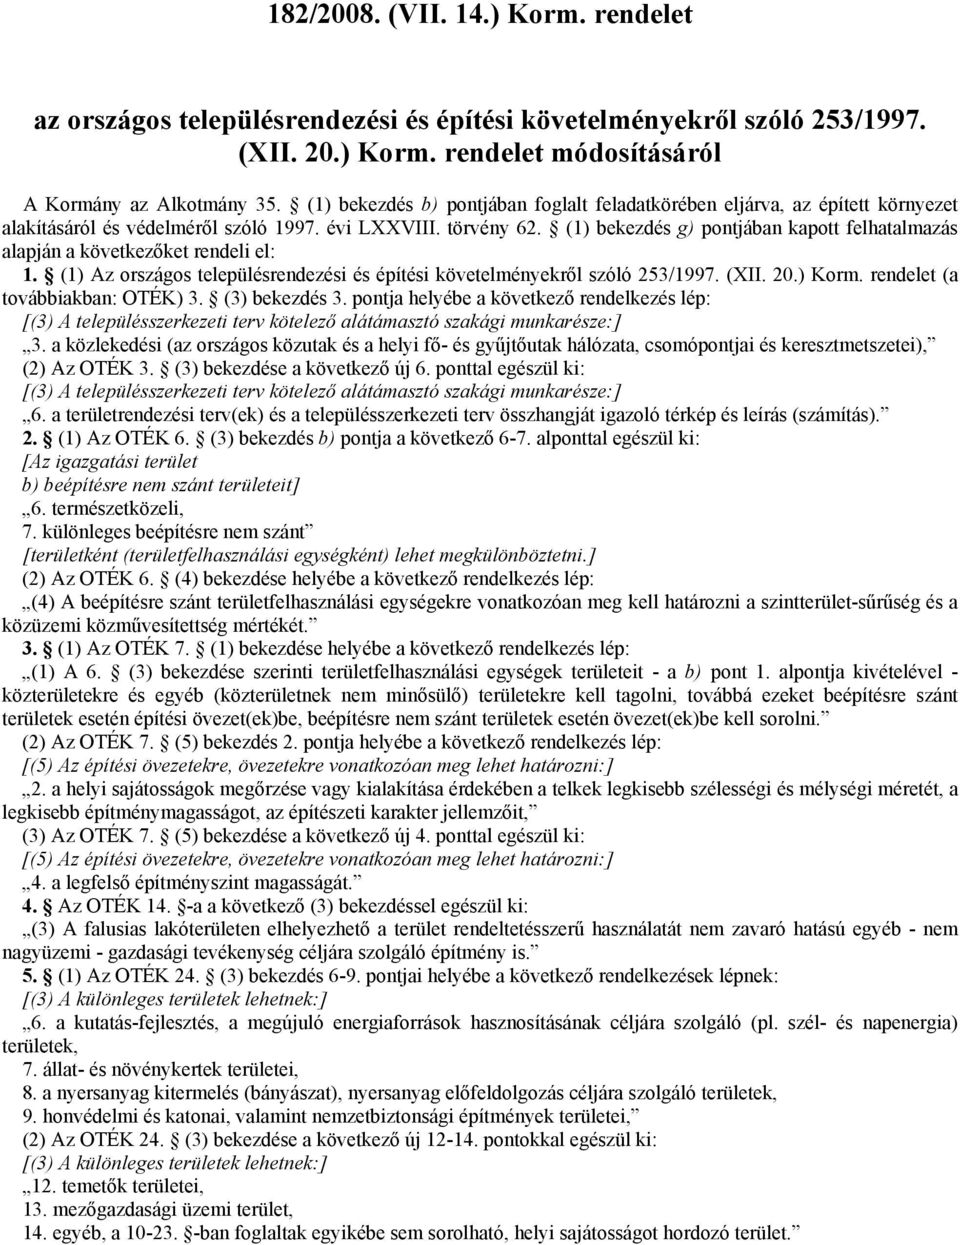 182/2008. (VII. 14.) Korm. rendelet - PDF Free Download